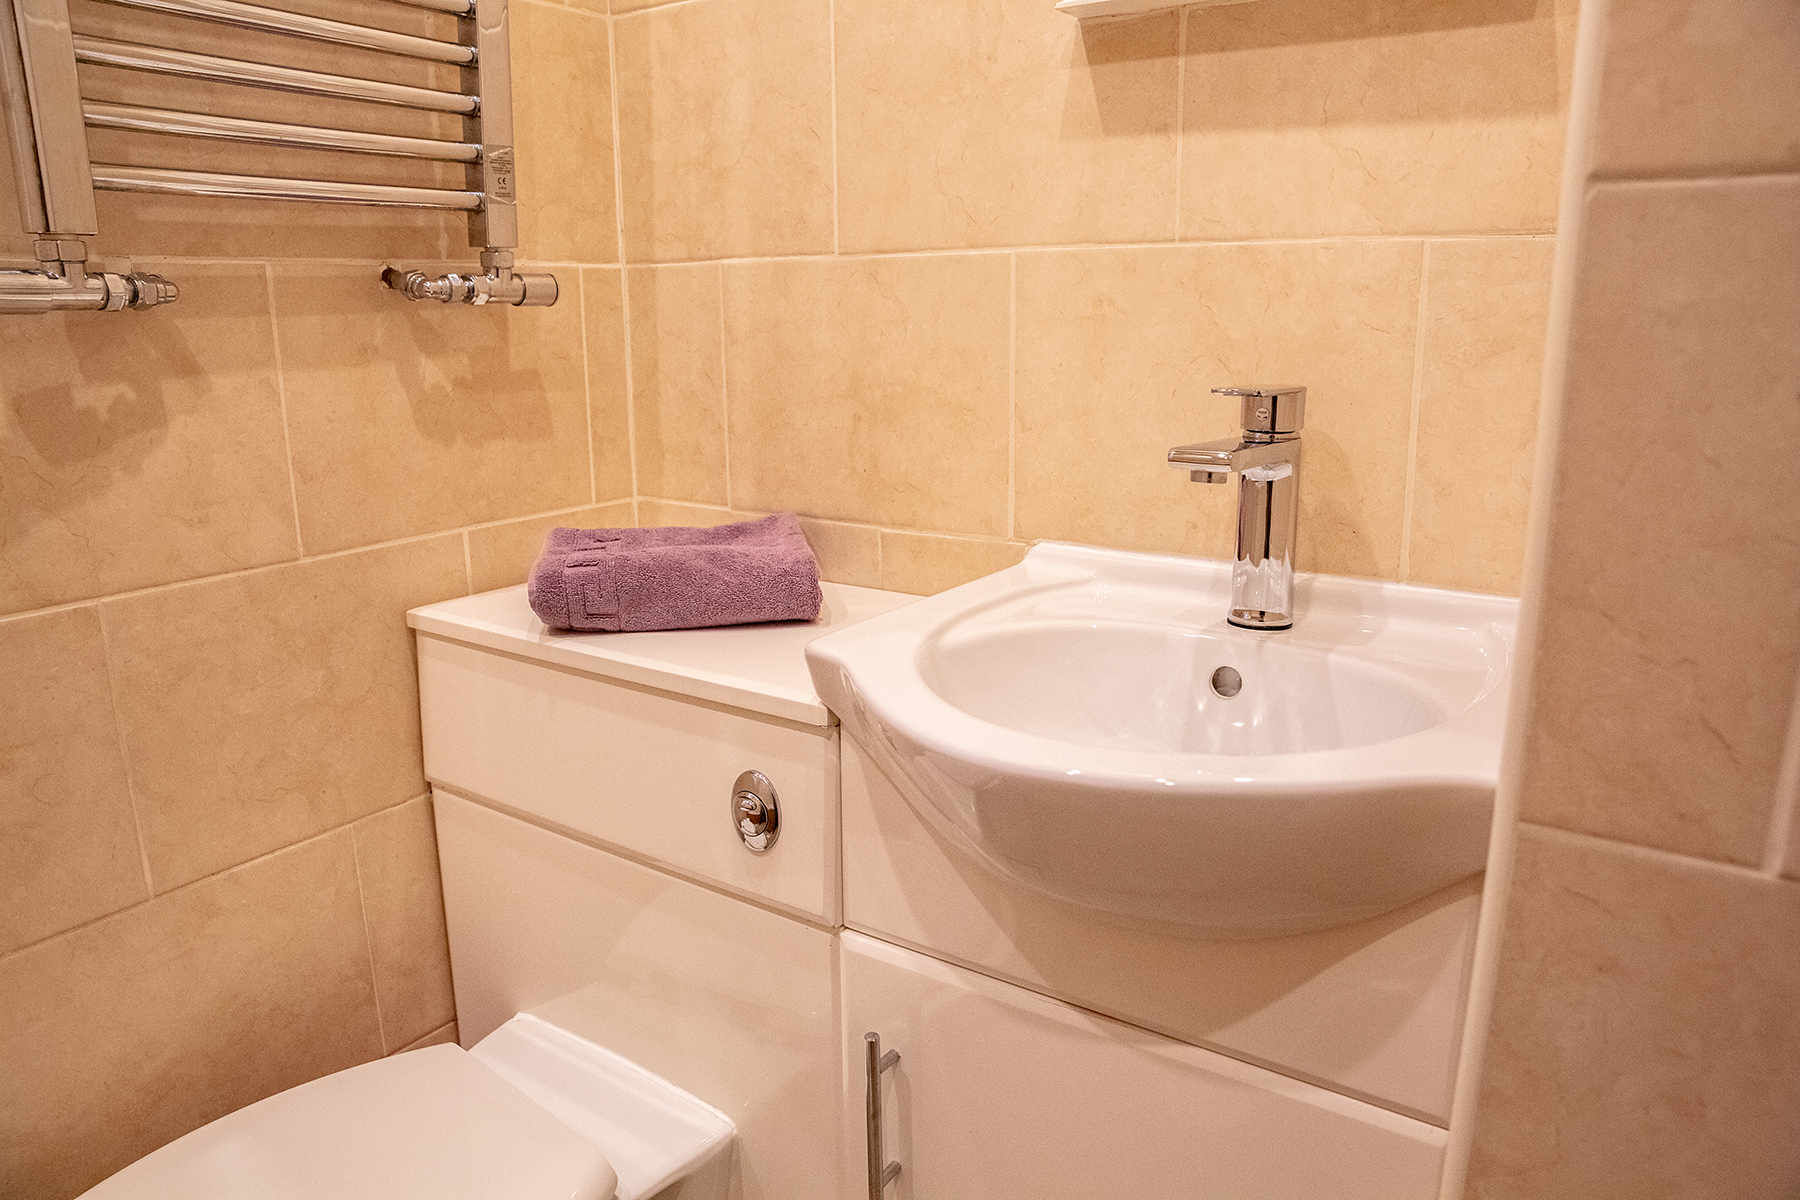 A clean bathroom with a face towel folded neatly on show